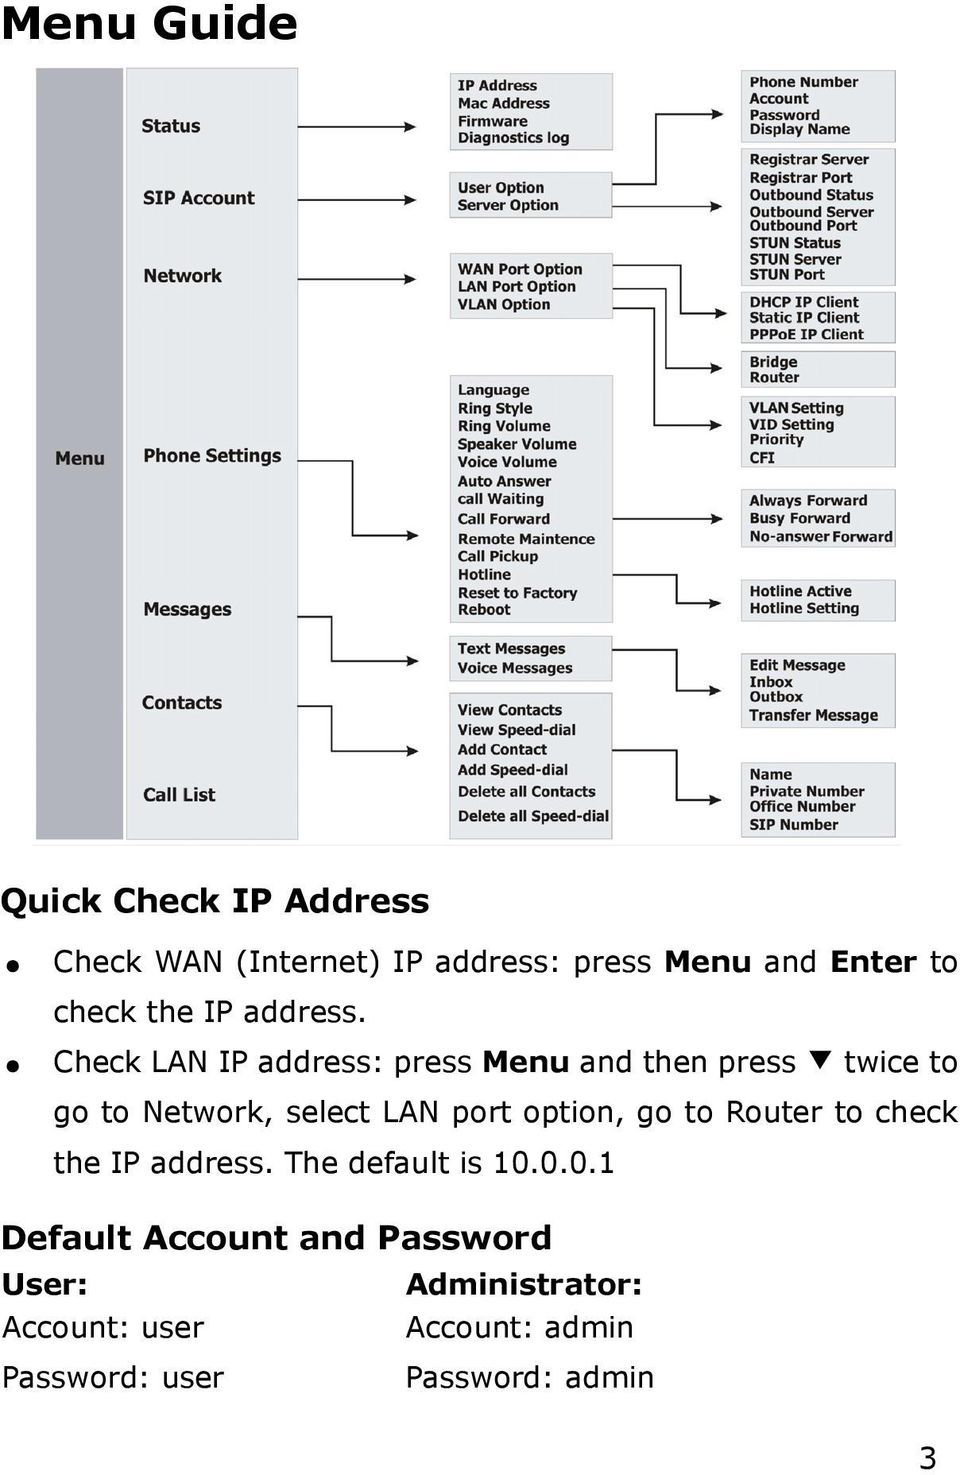 Check LAN IP address: press Menu and then press twice to go to Network, select LAN port option,